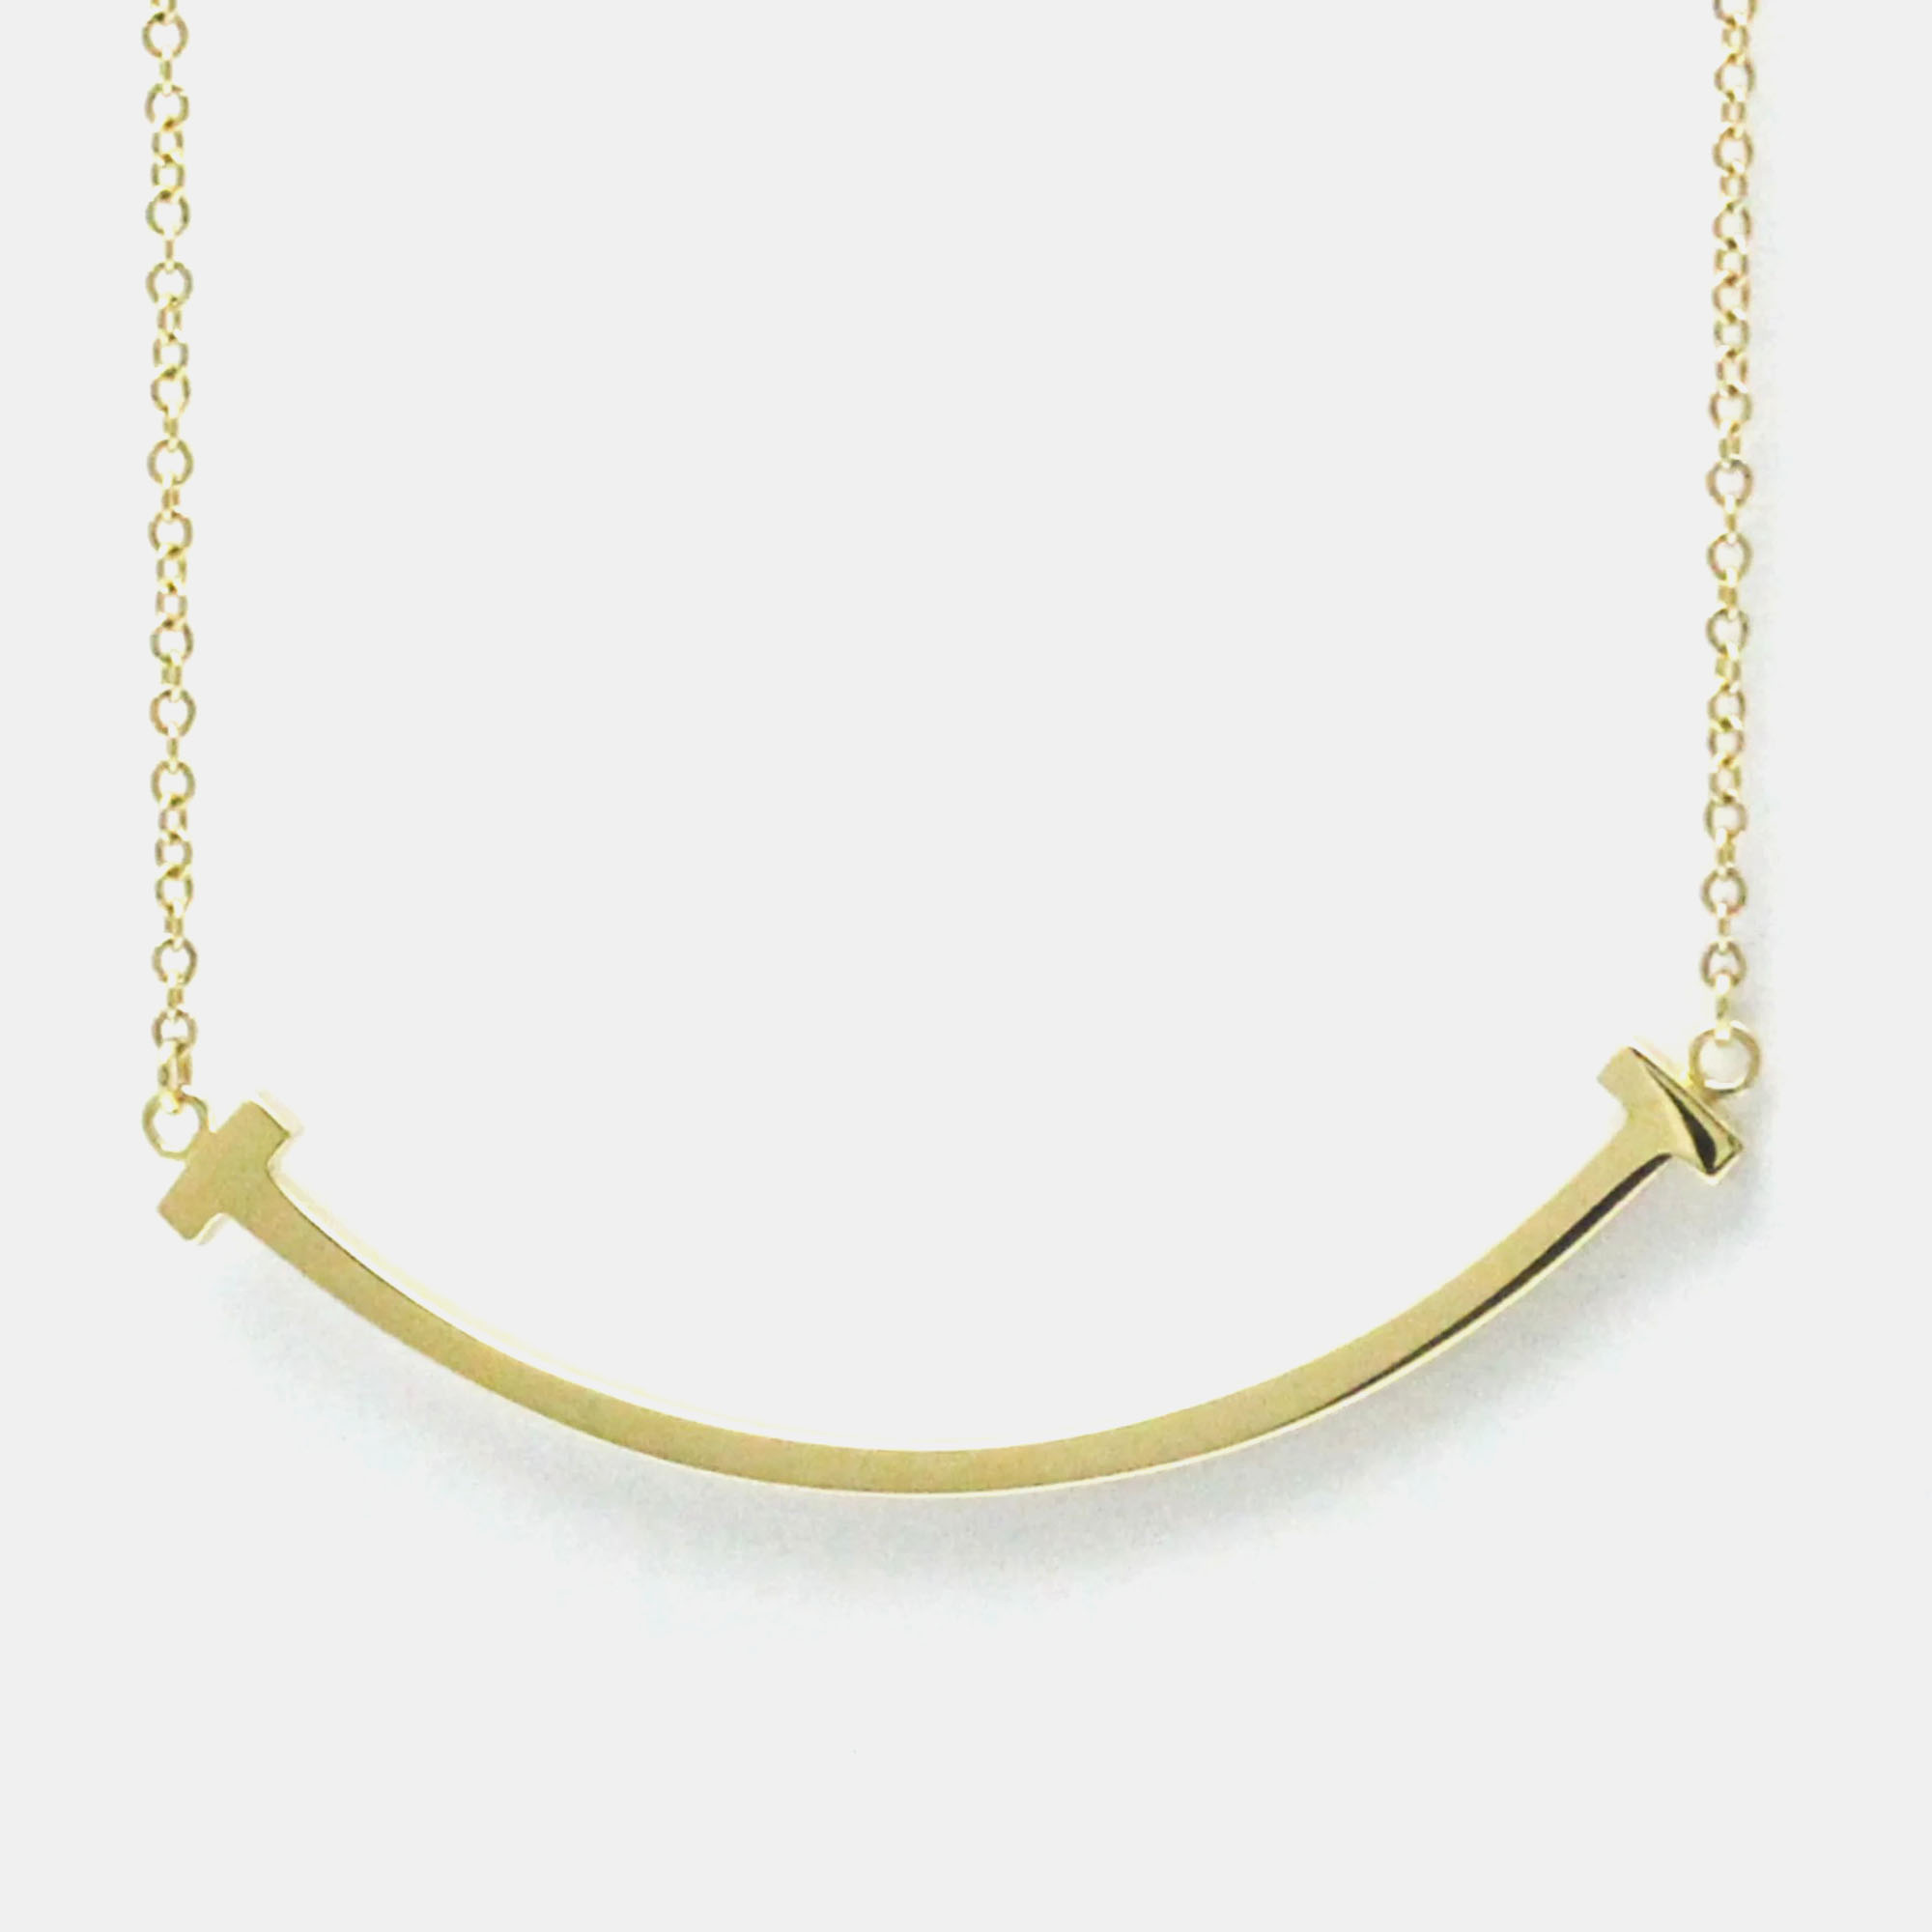 Tiffany & co. 18k yellow gold smile pendant